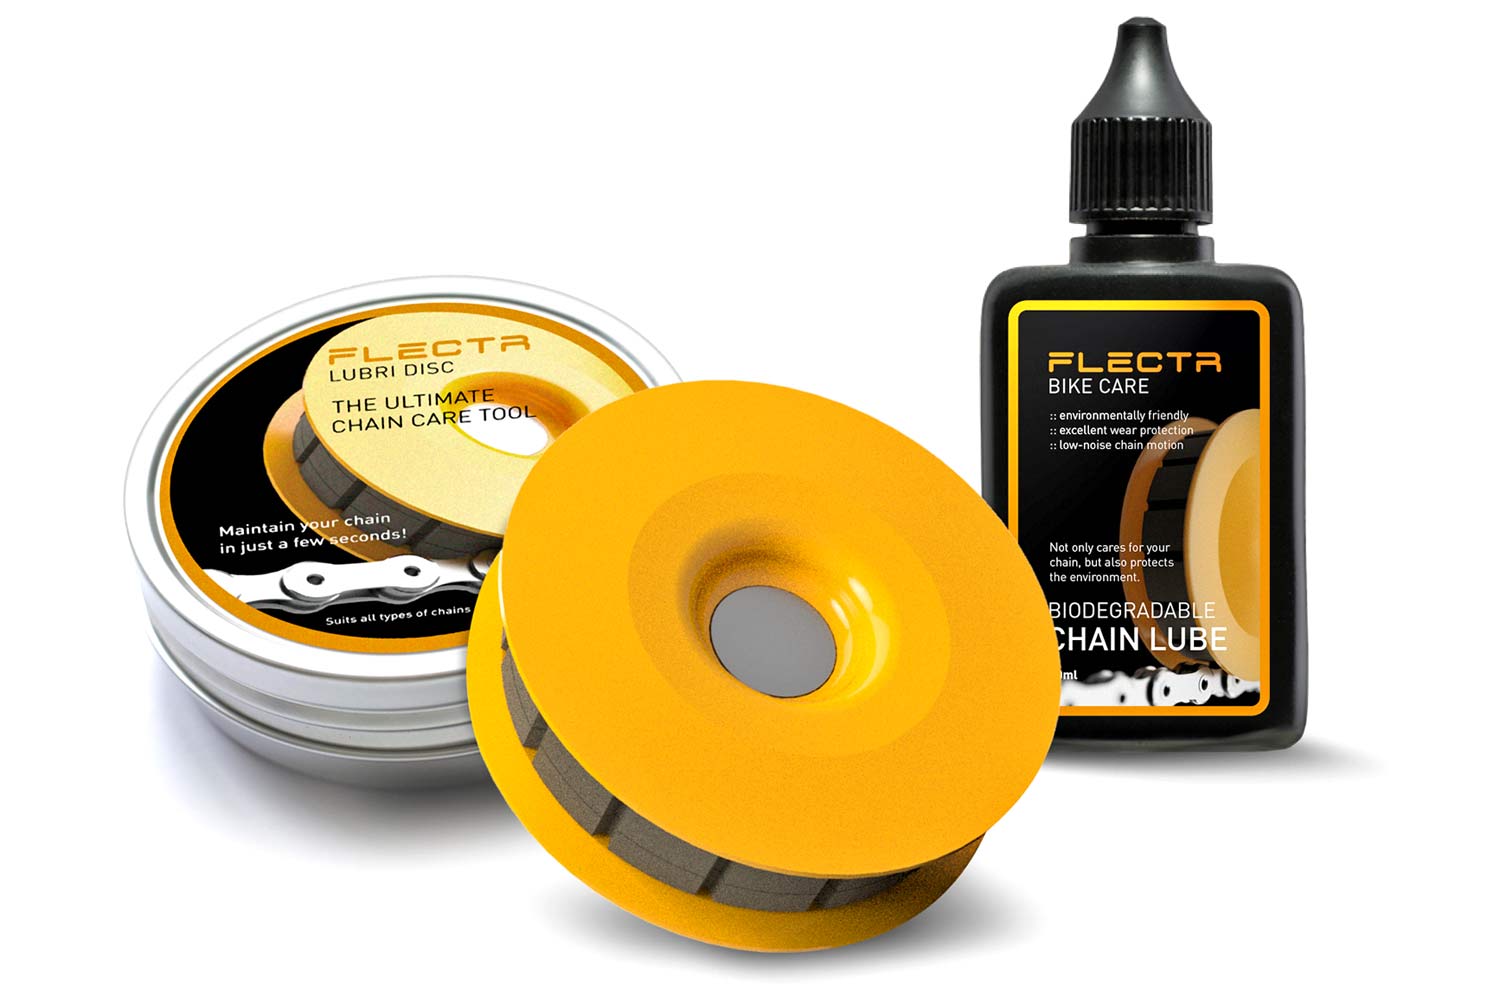 Flectr Lubri Disc chain lube clean, efficient chain lubrication gadget, felt lubricator wheel